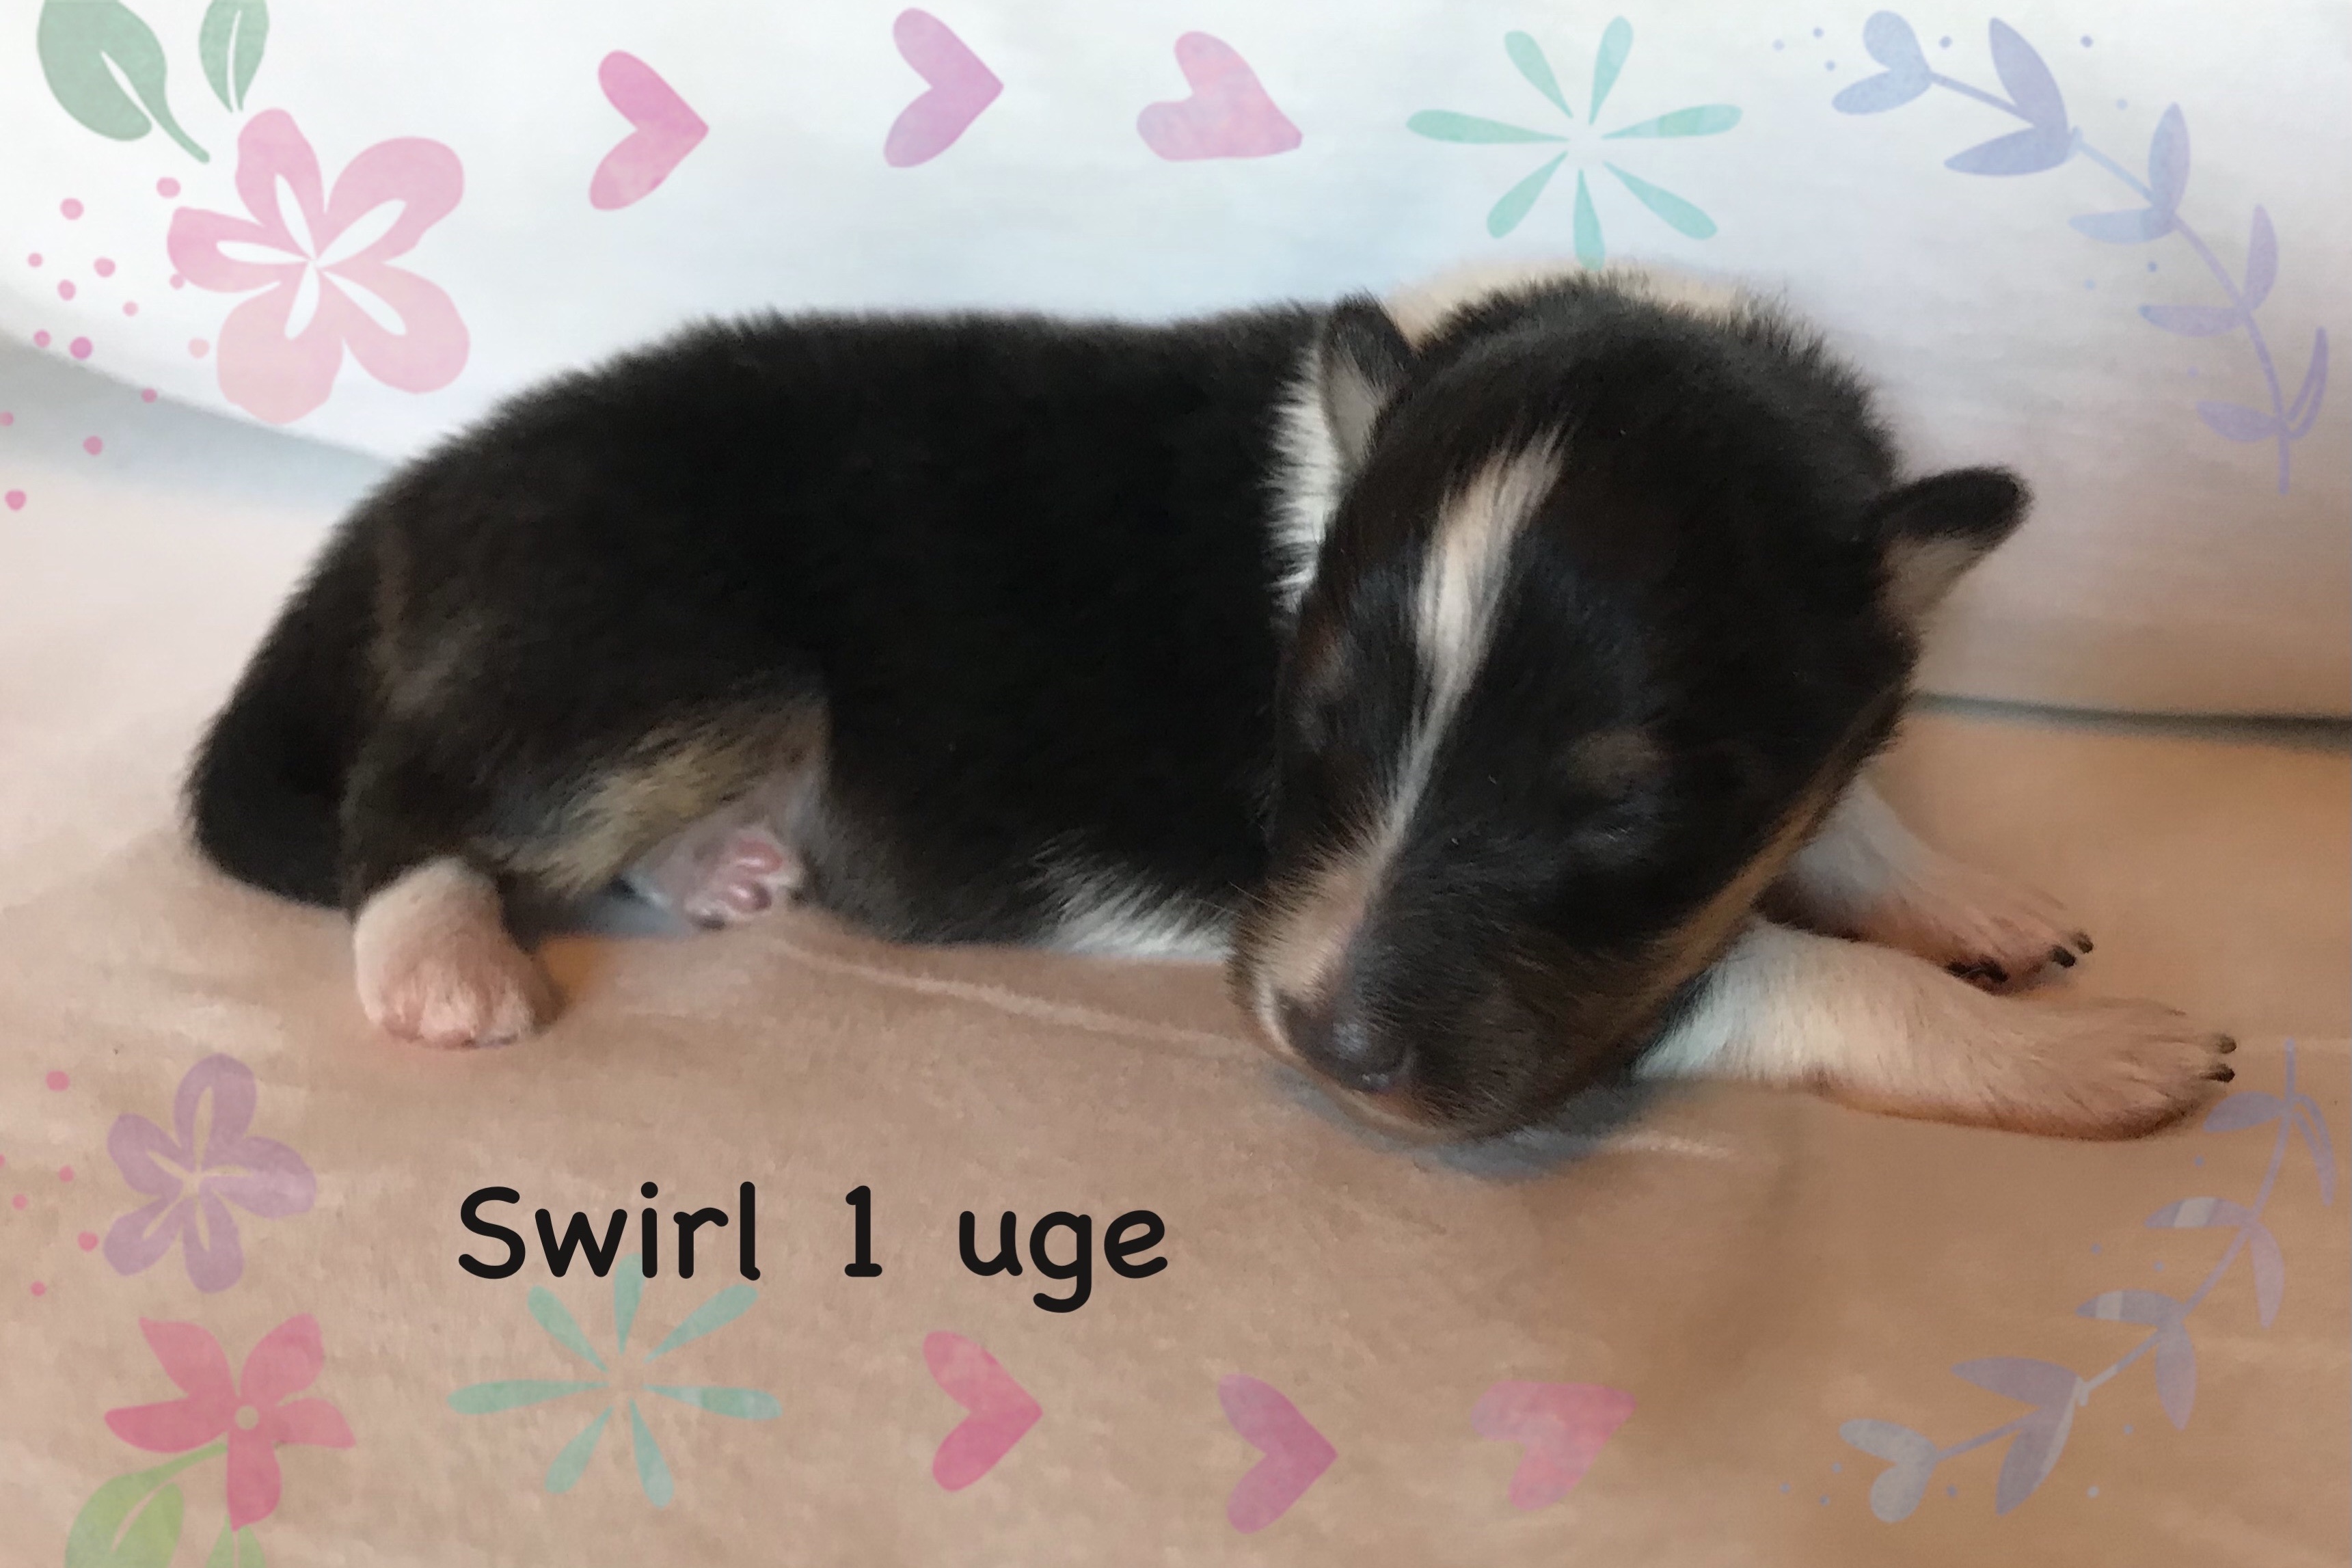 Swirl har fået sit navn fordi hun har en lille hvirvel i sin pels.